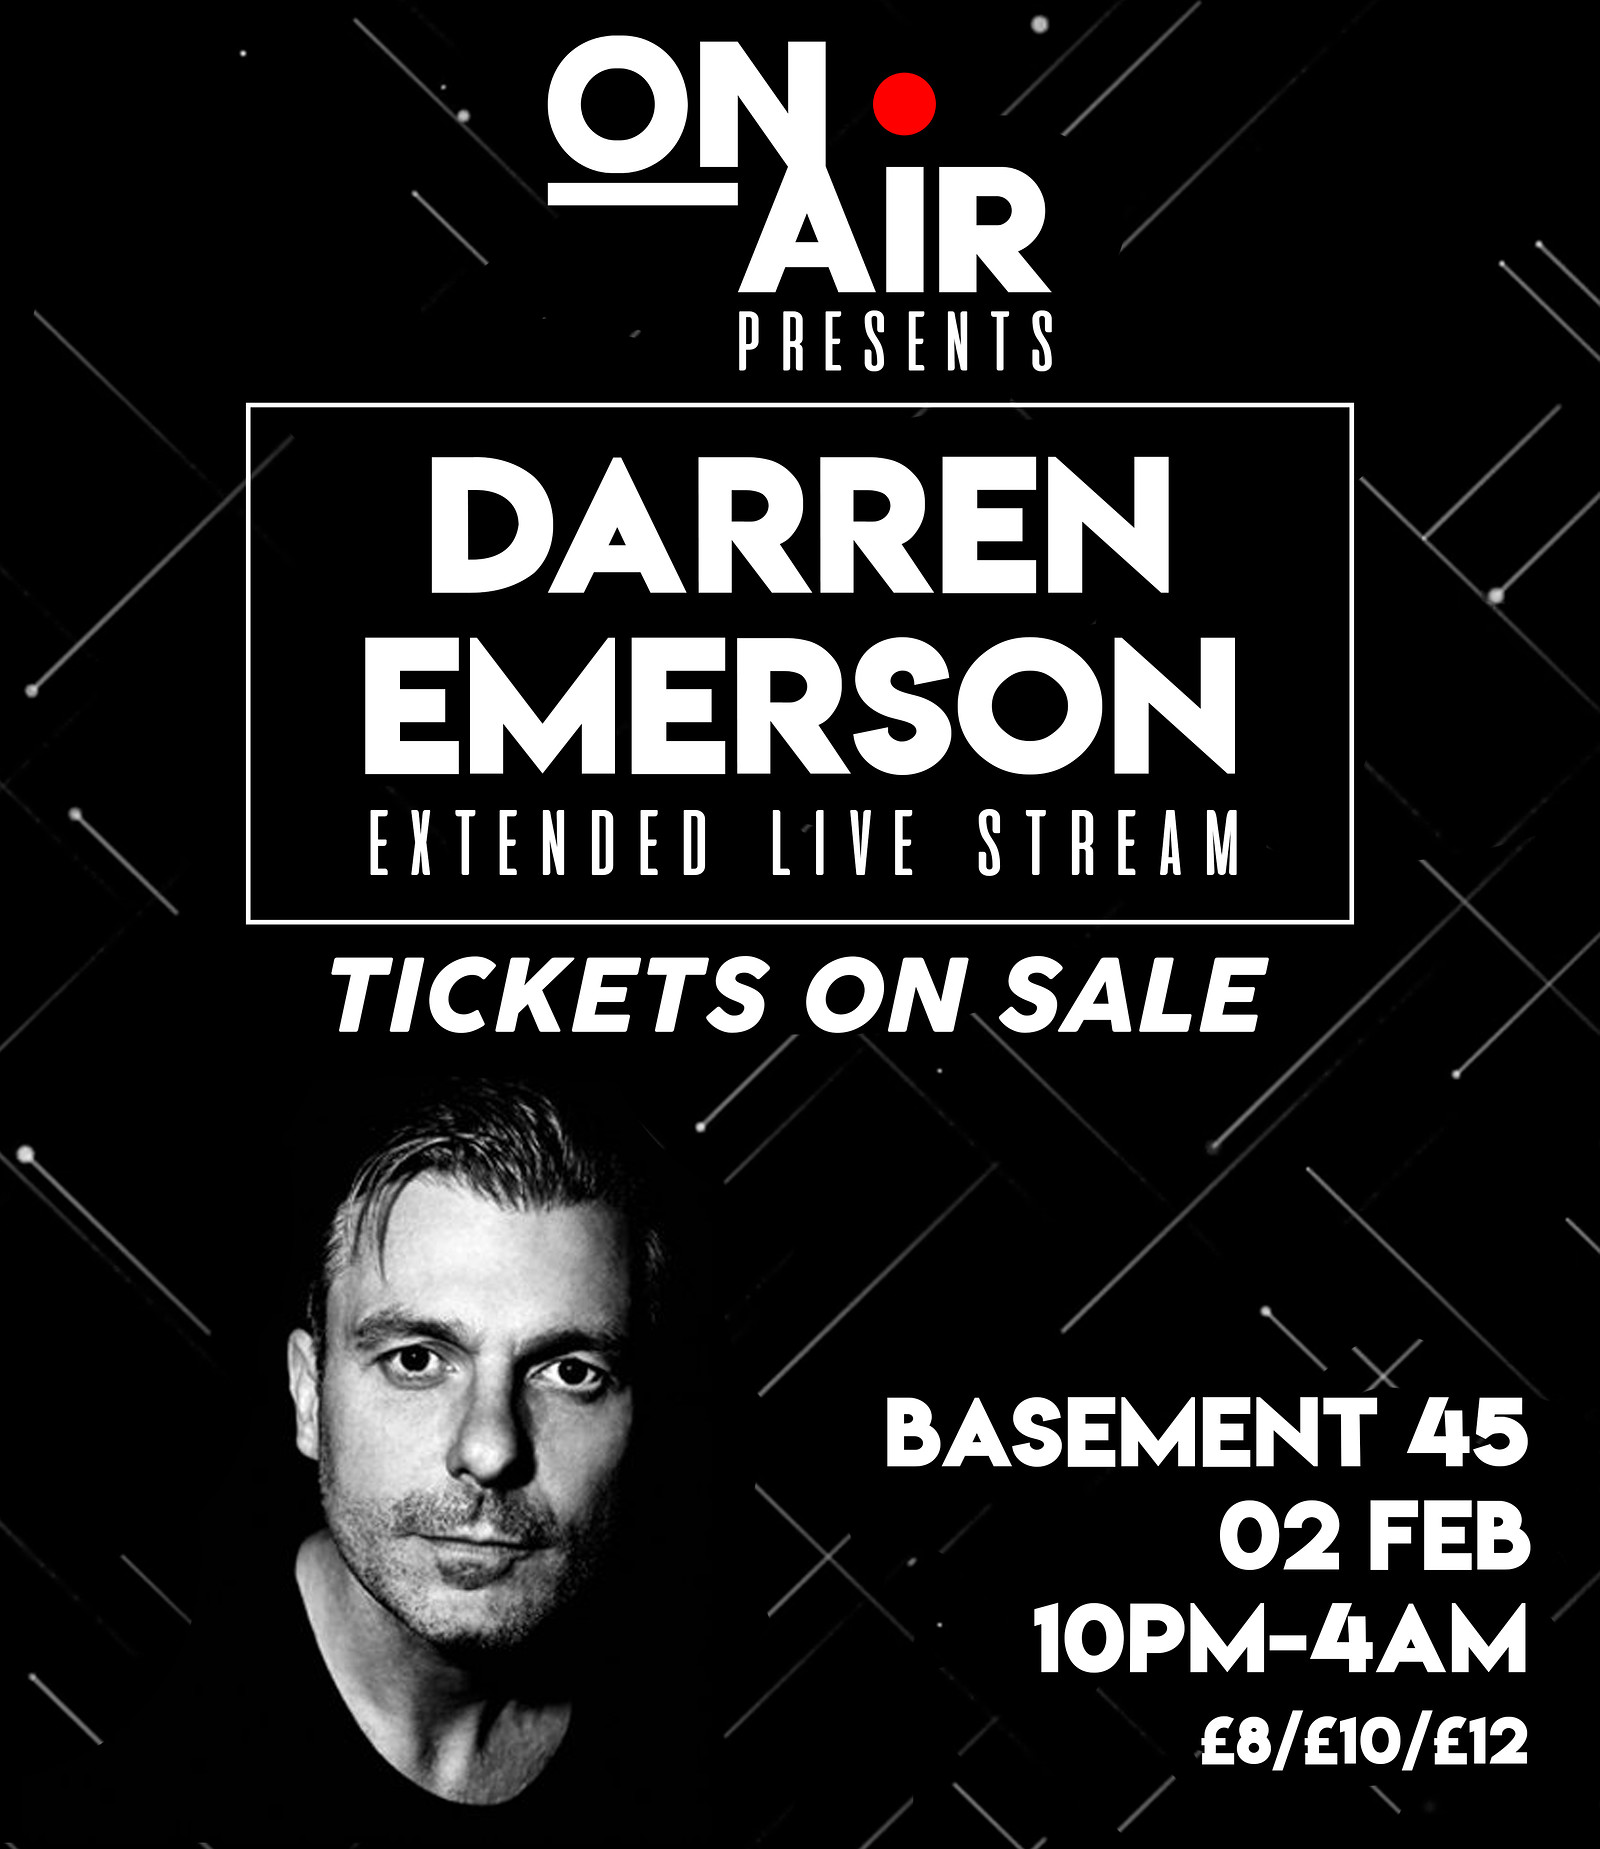 On Air Presents: Darren Emerson at Basement 45